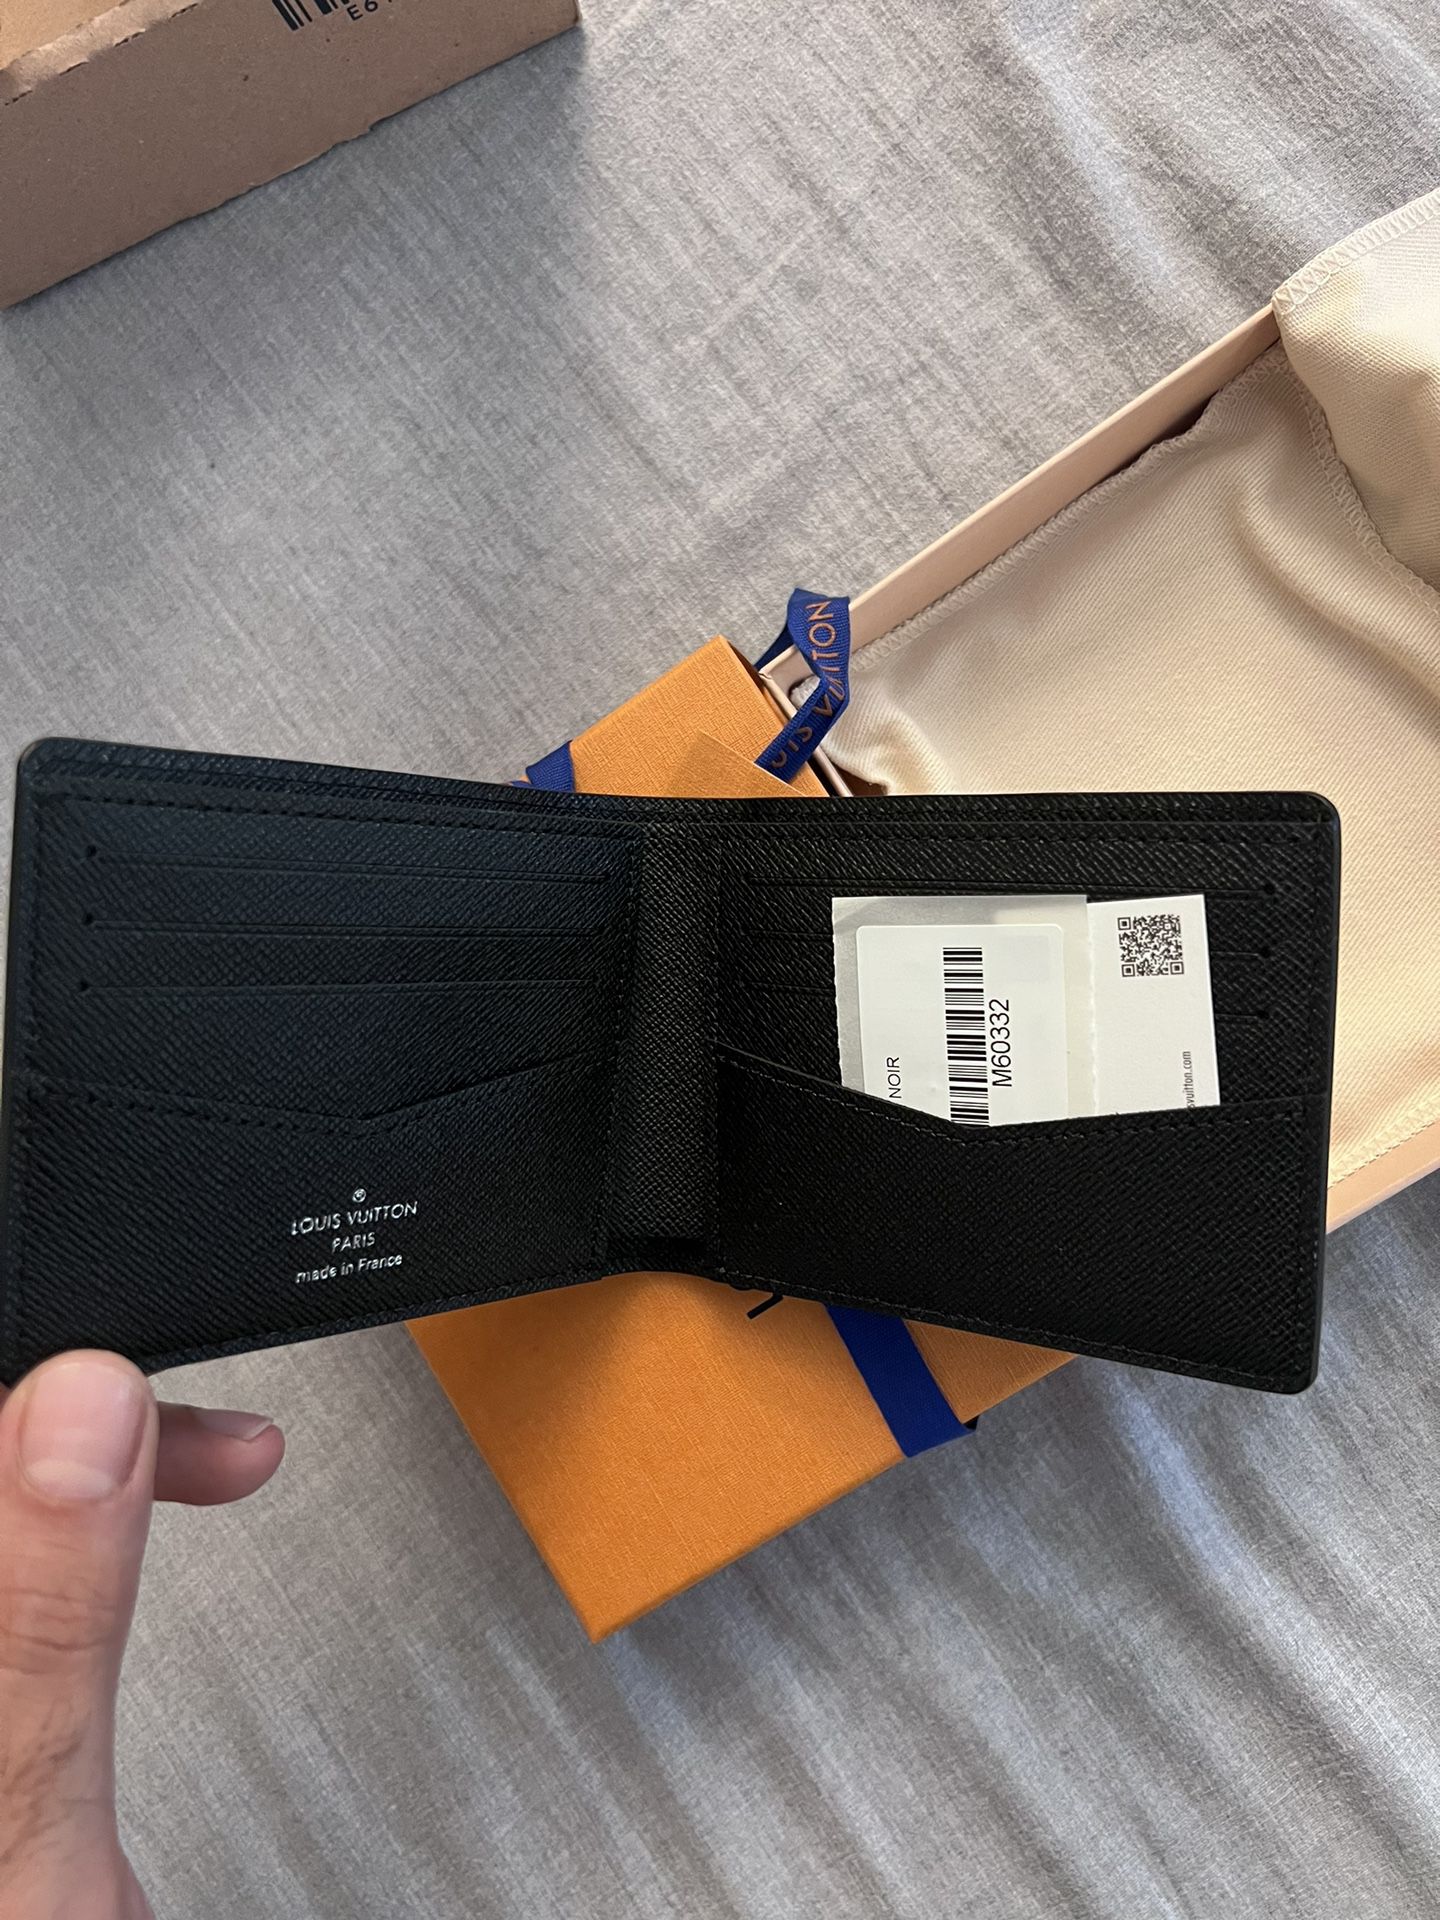 Louis Vuitton slender I.D wallet for Sale in Clinton Township, MI - OfferUp